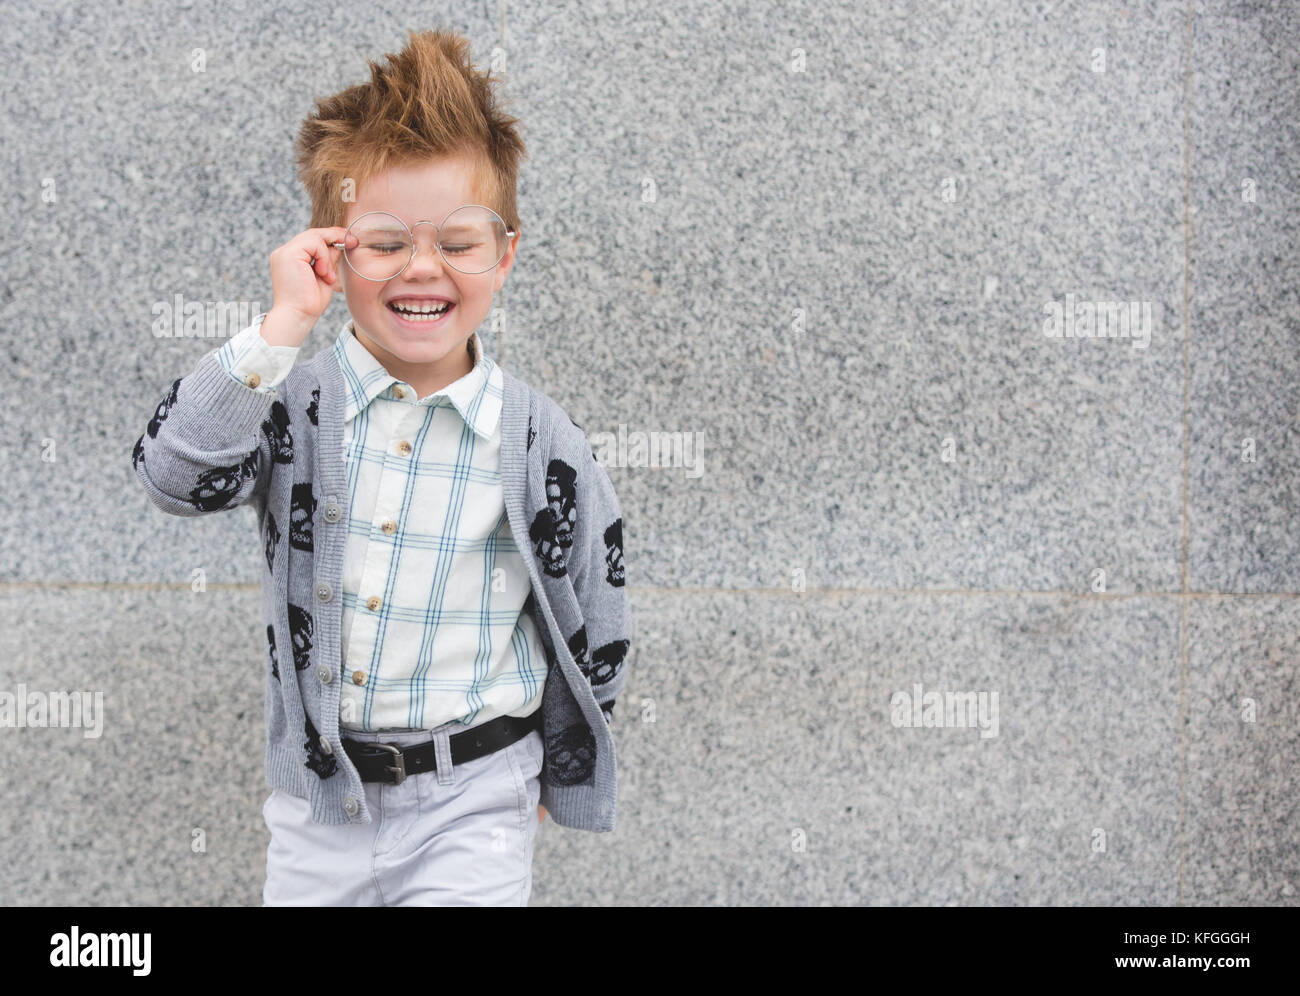 Fashion kid with glasses near gray wall Stock Photo